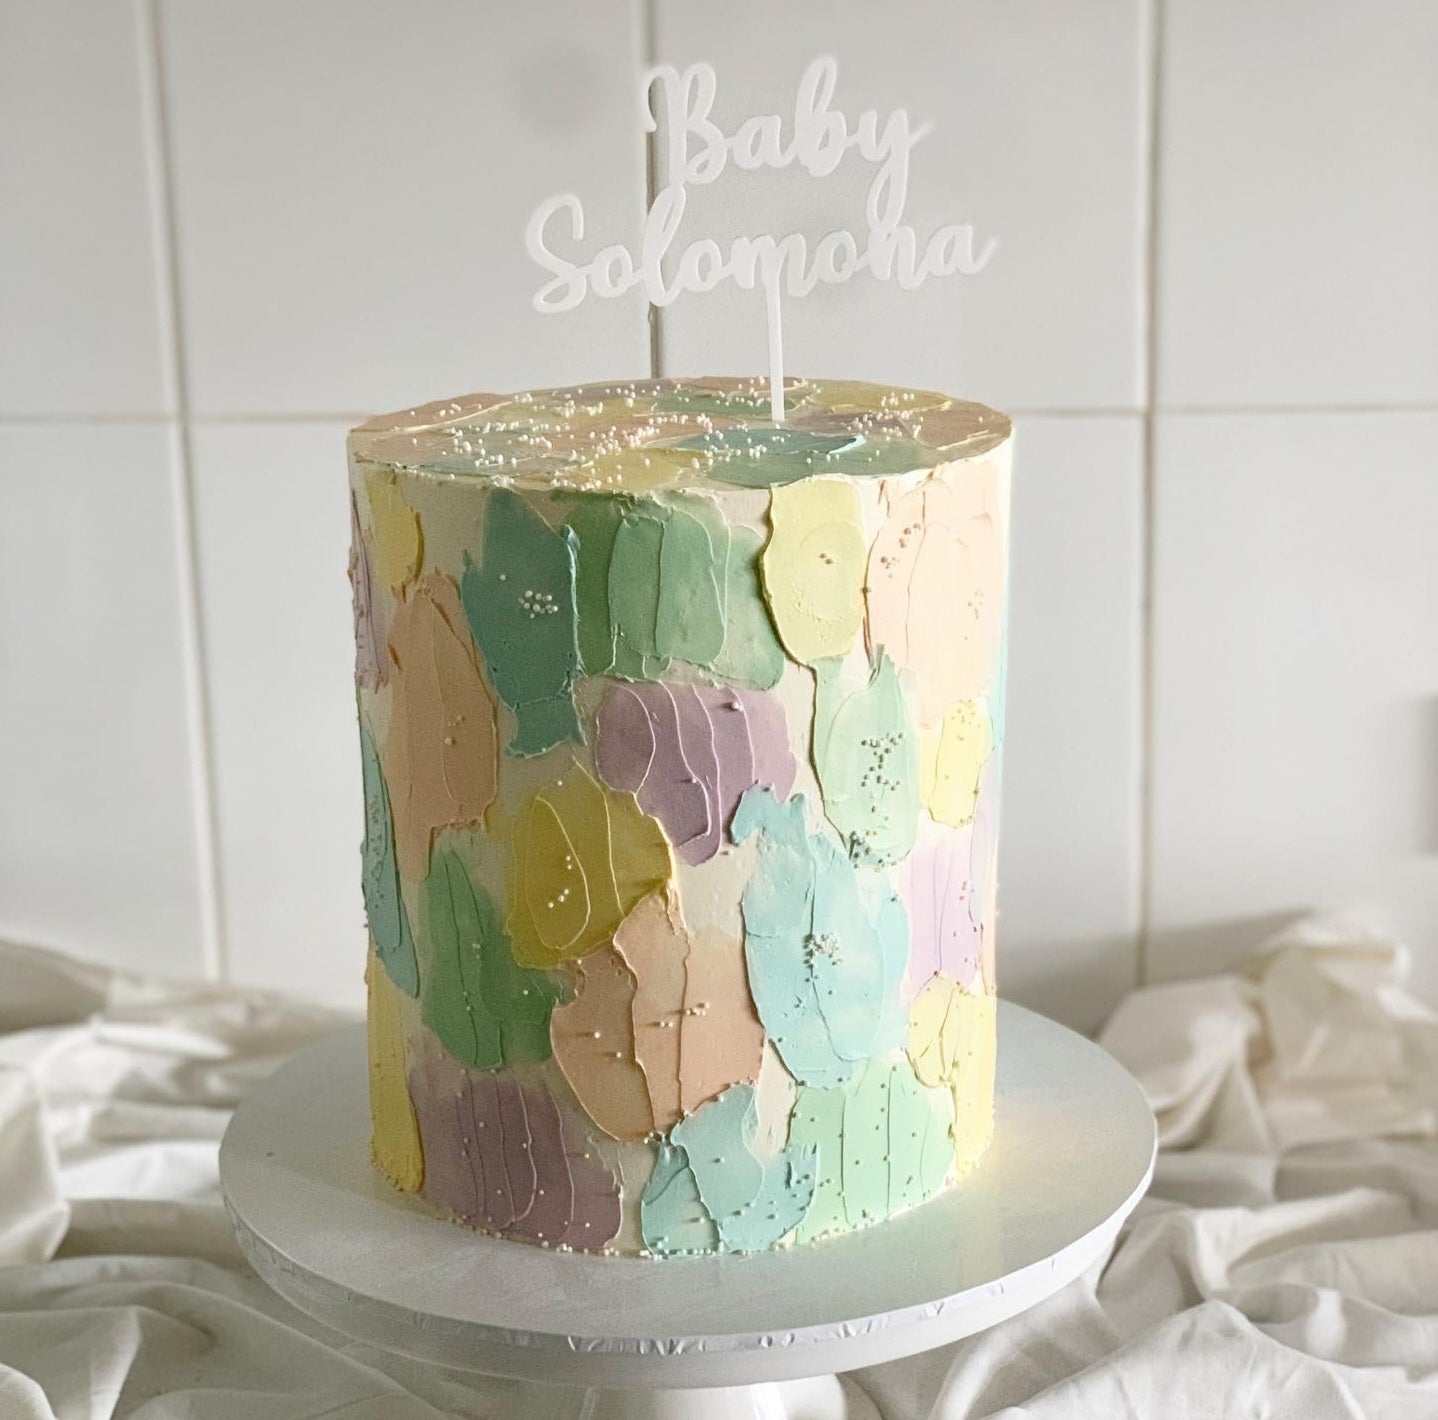 1,000+ Single Layer Cake Stock Photos, Pictures & Royalty-Free Images -  iStock | Square cake, Sheet cake, Cake round